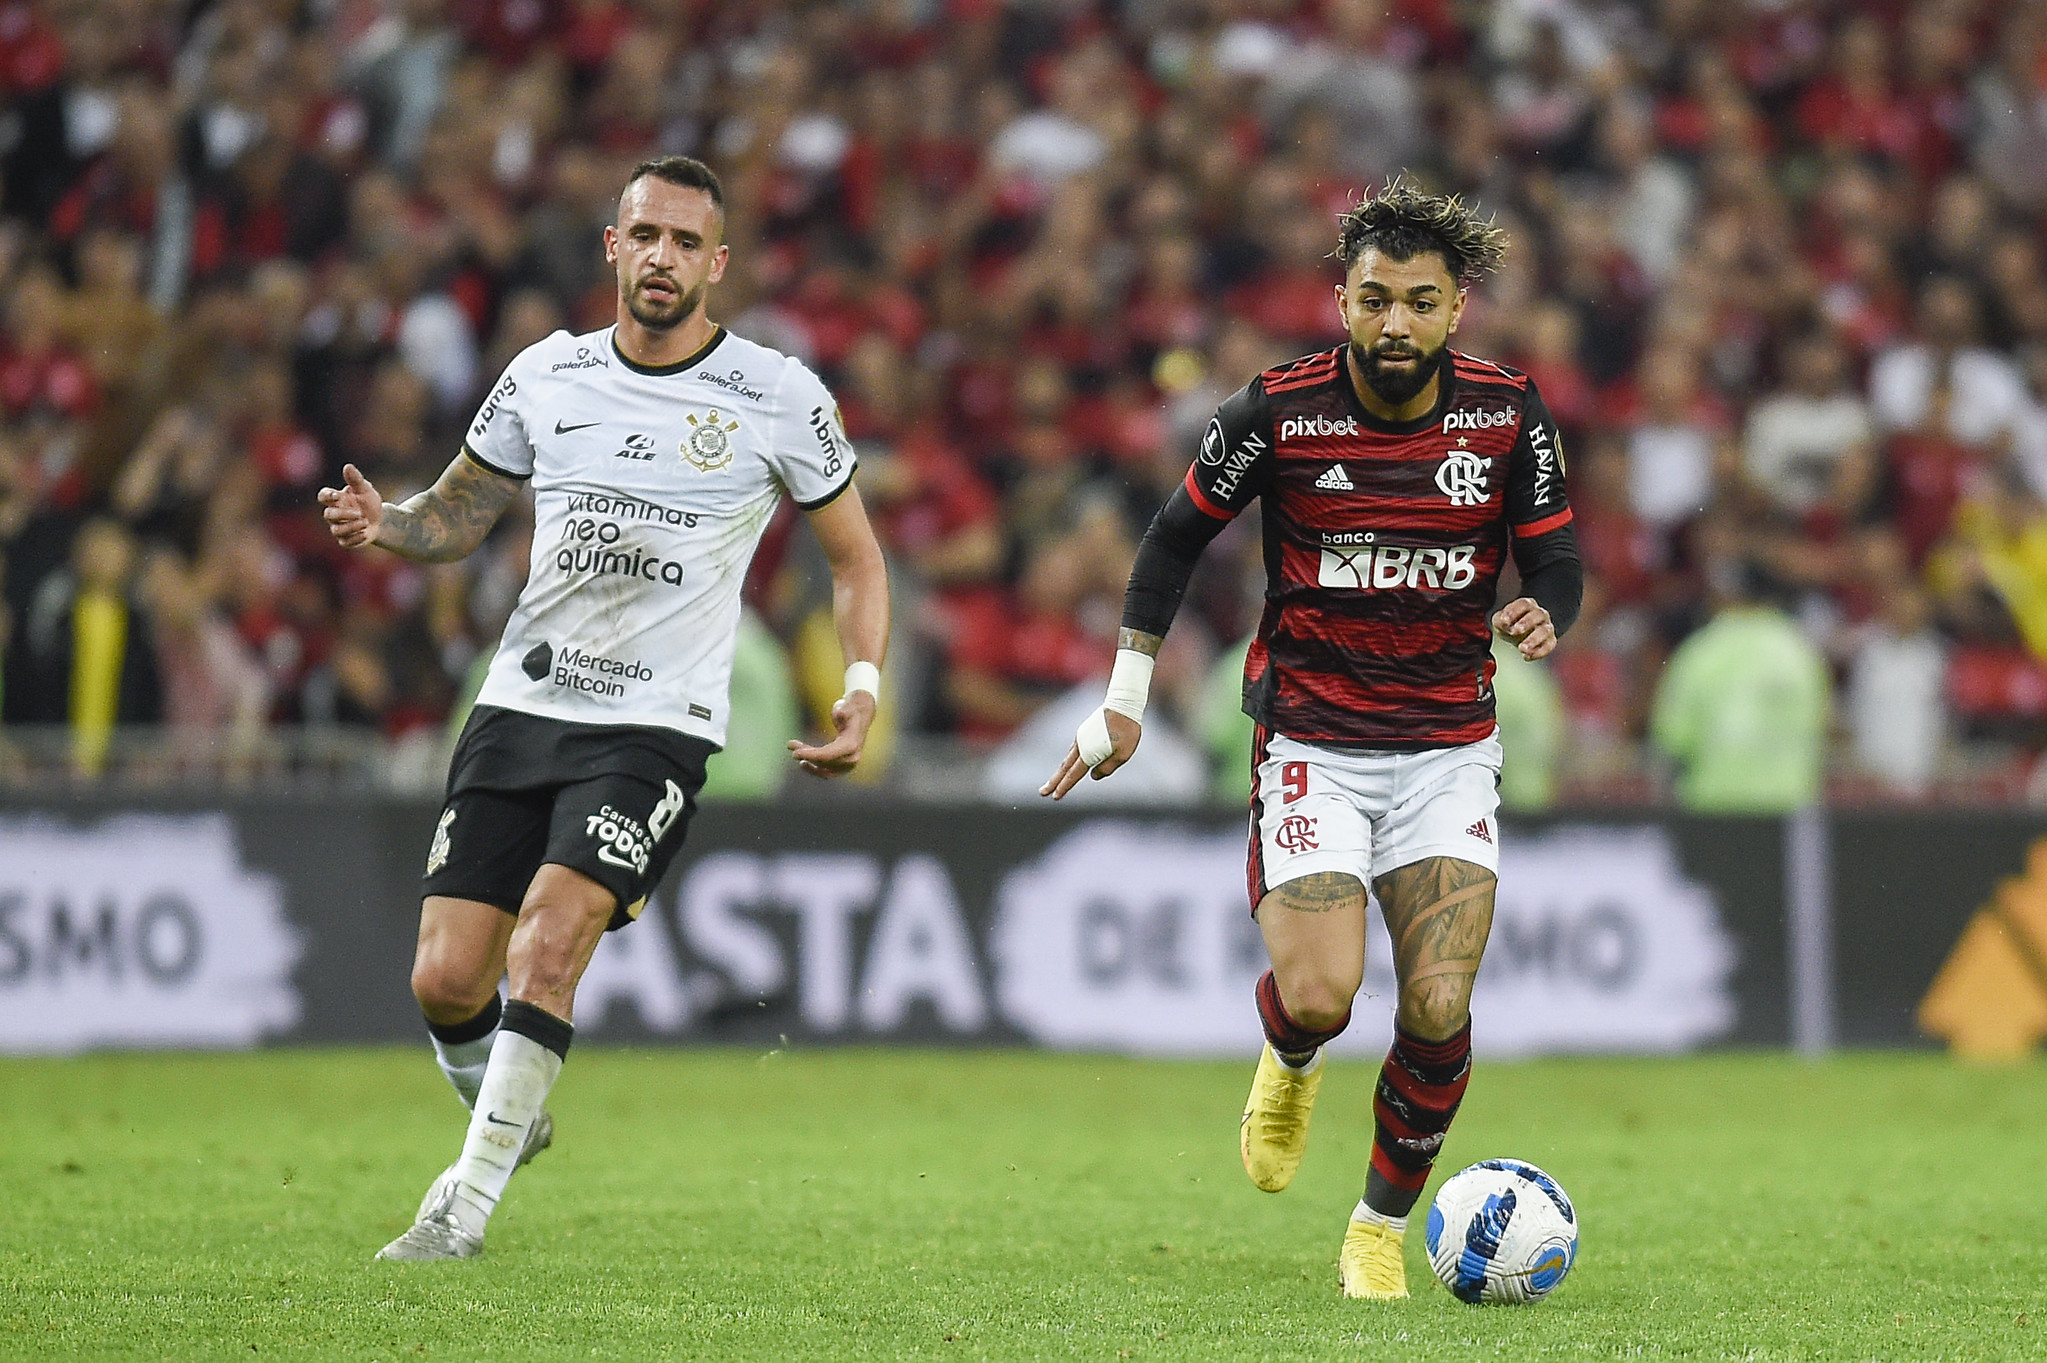 SBT ultrapassa Globo e lidera audiência durante Flamengo x Corinthians